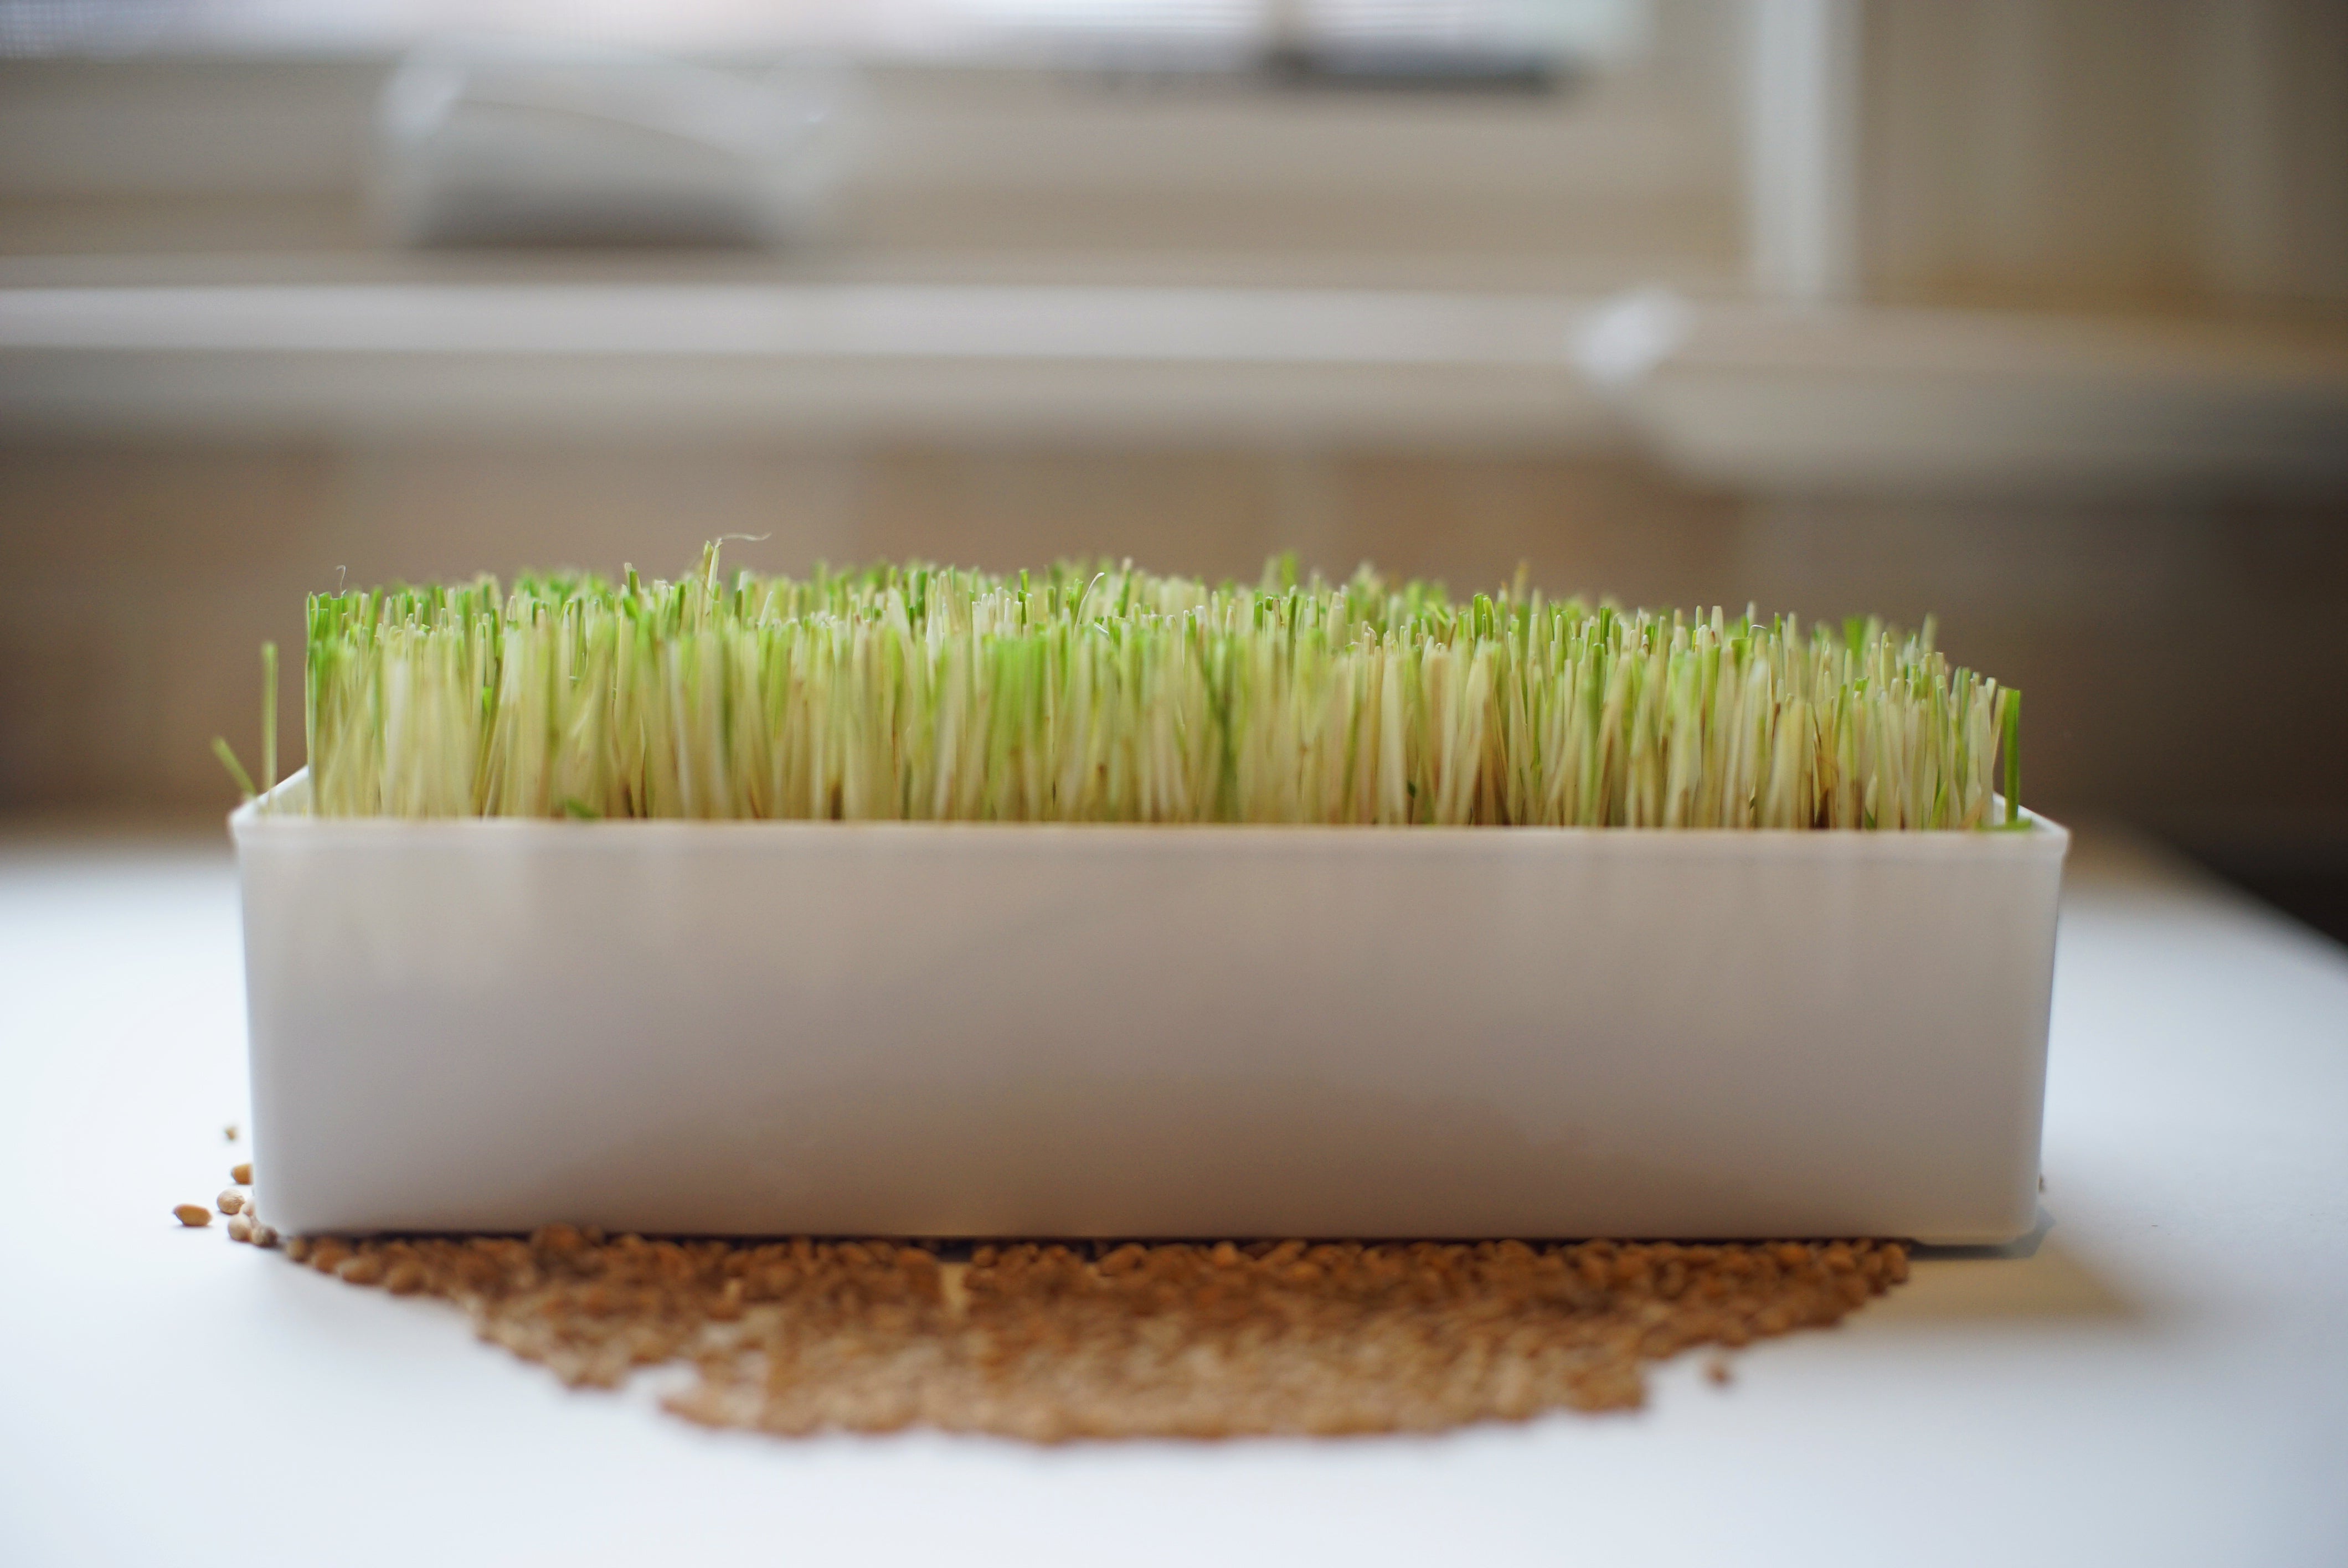 Grow Your Own Wheatgrass Kit - Urban Minimalist